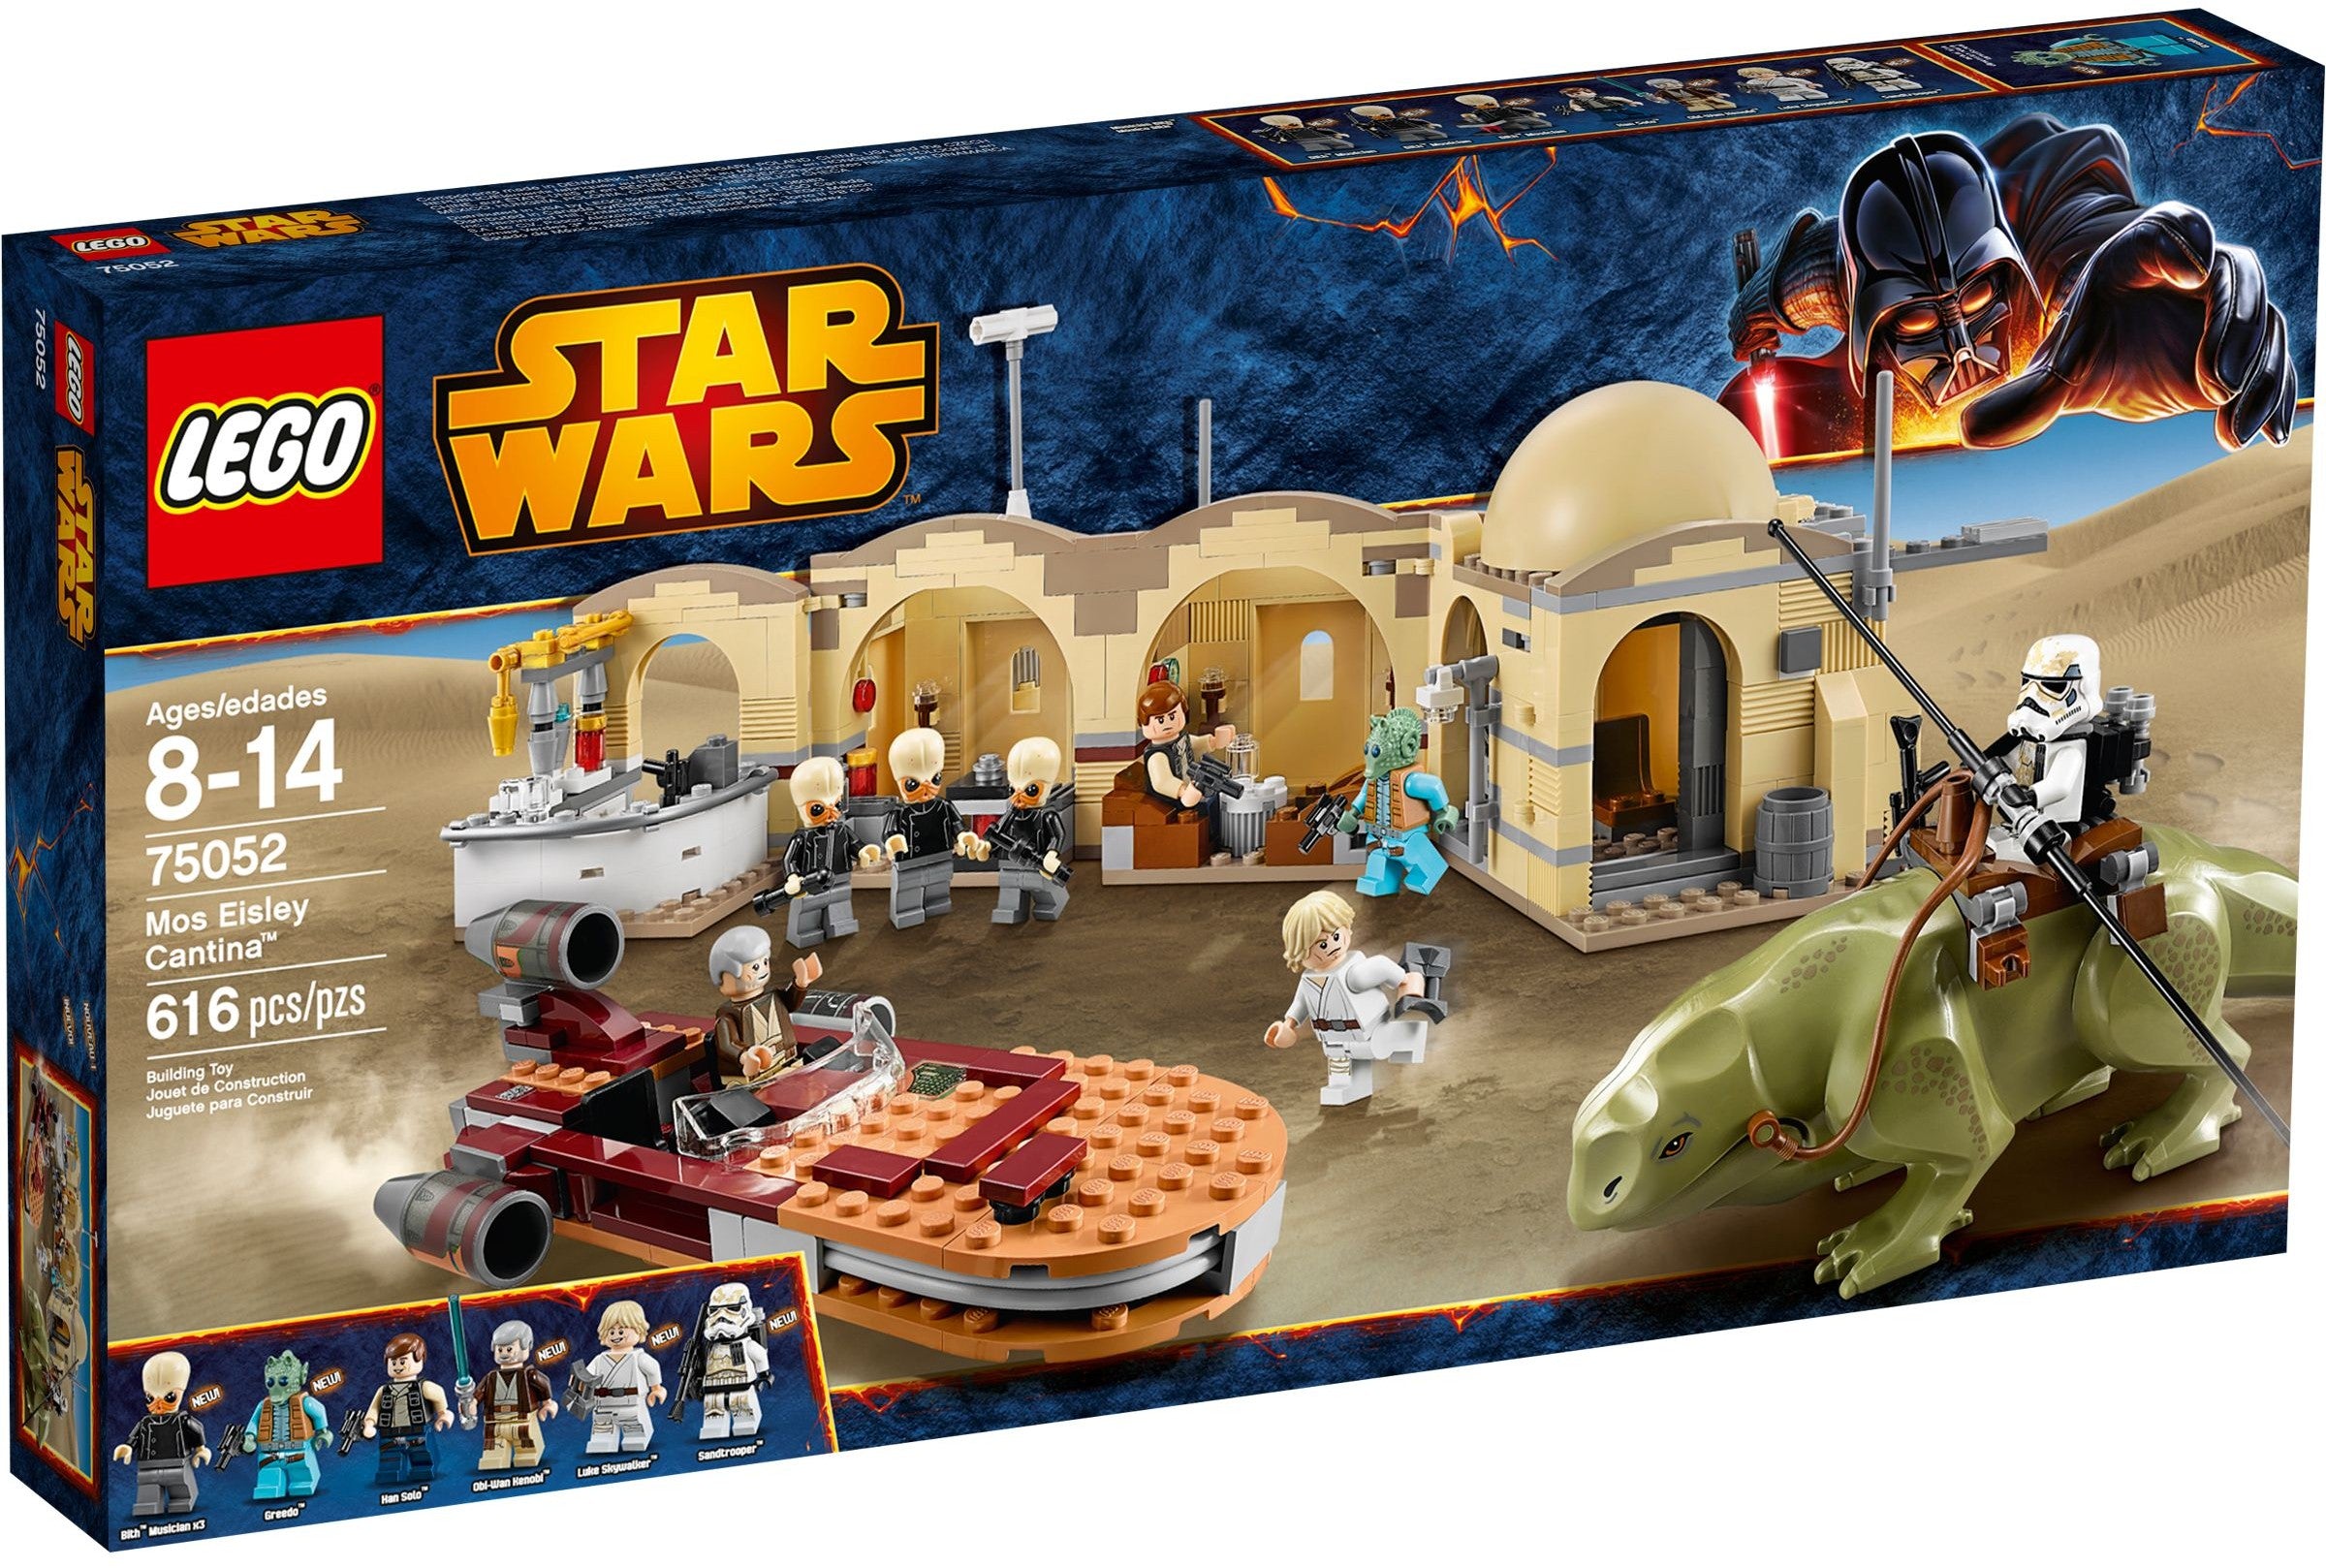 Lego Star Wars 75052 - Mos Eisley Cantina